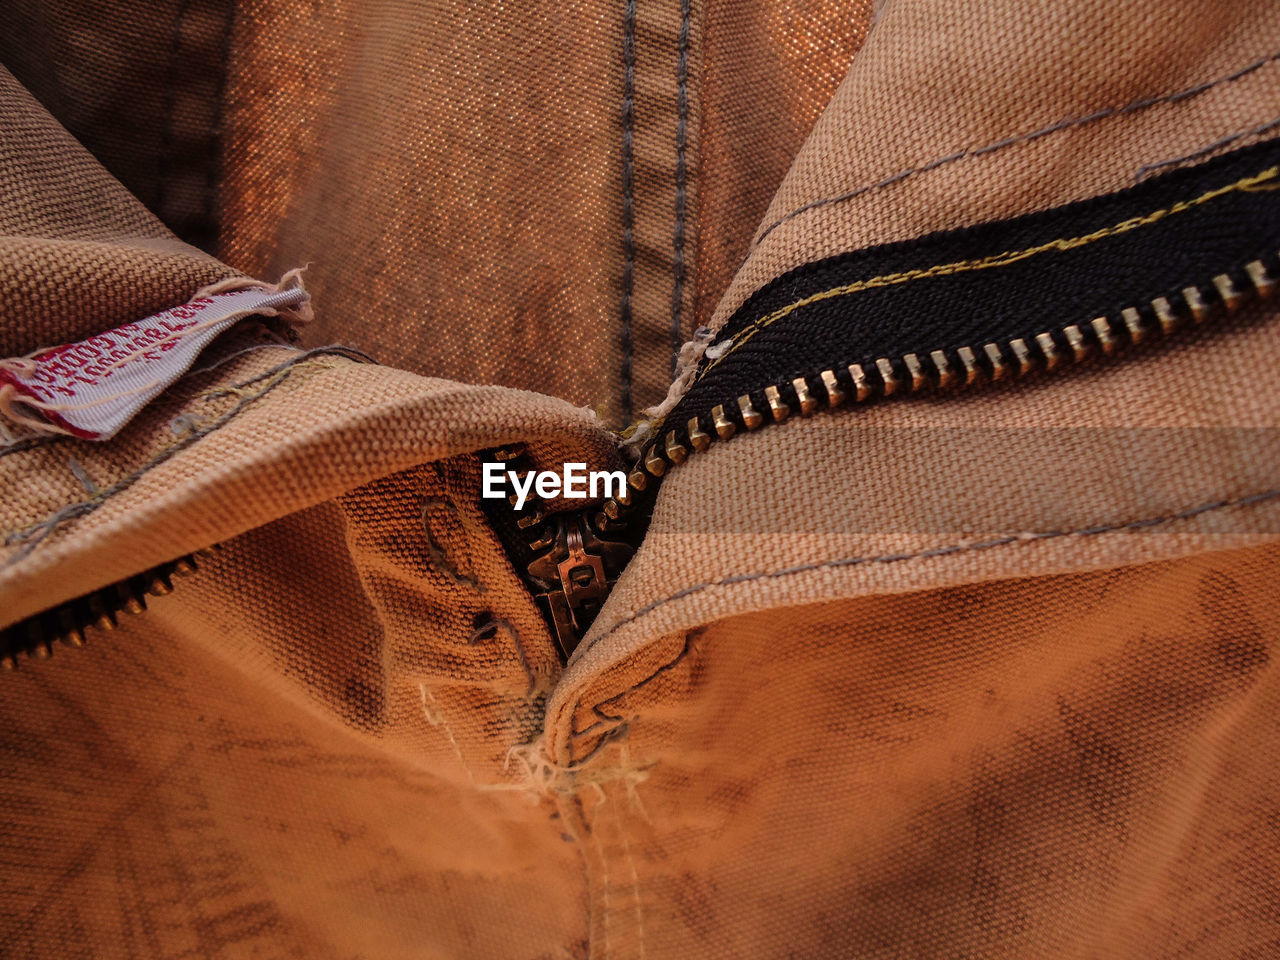 Close-up of jeans zipper